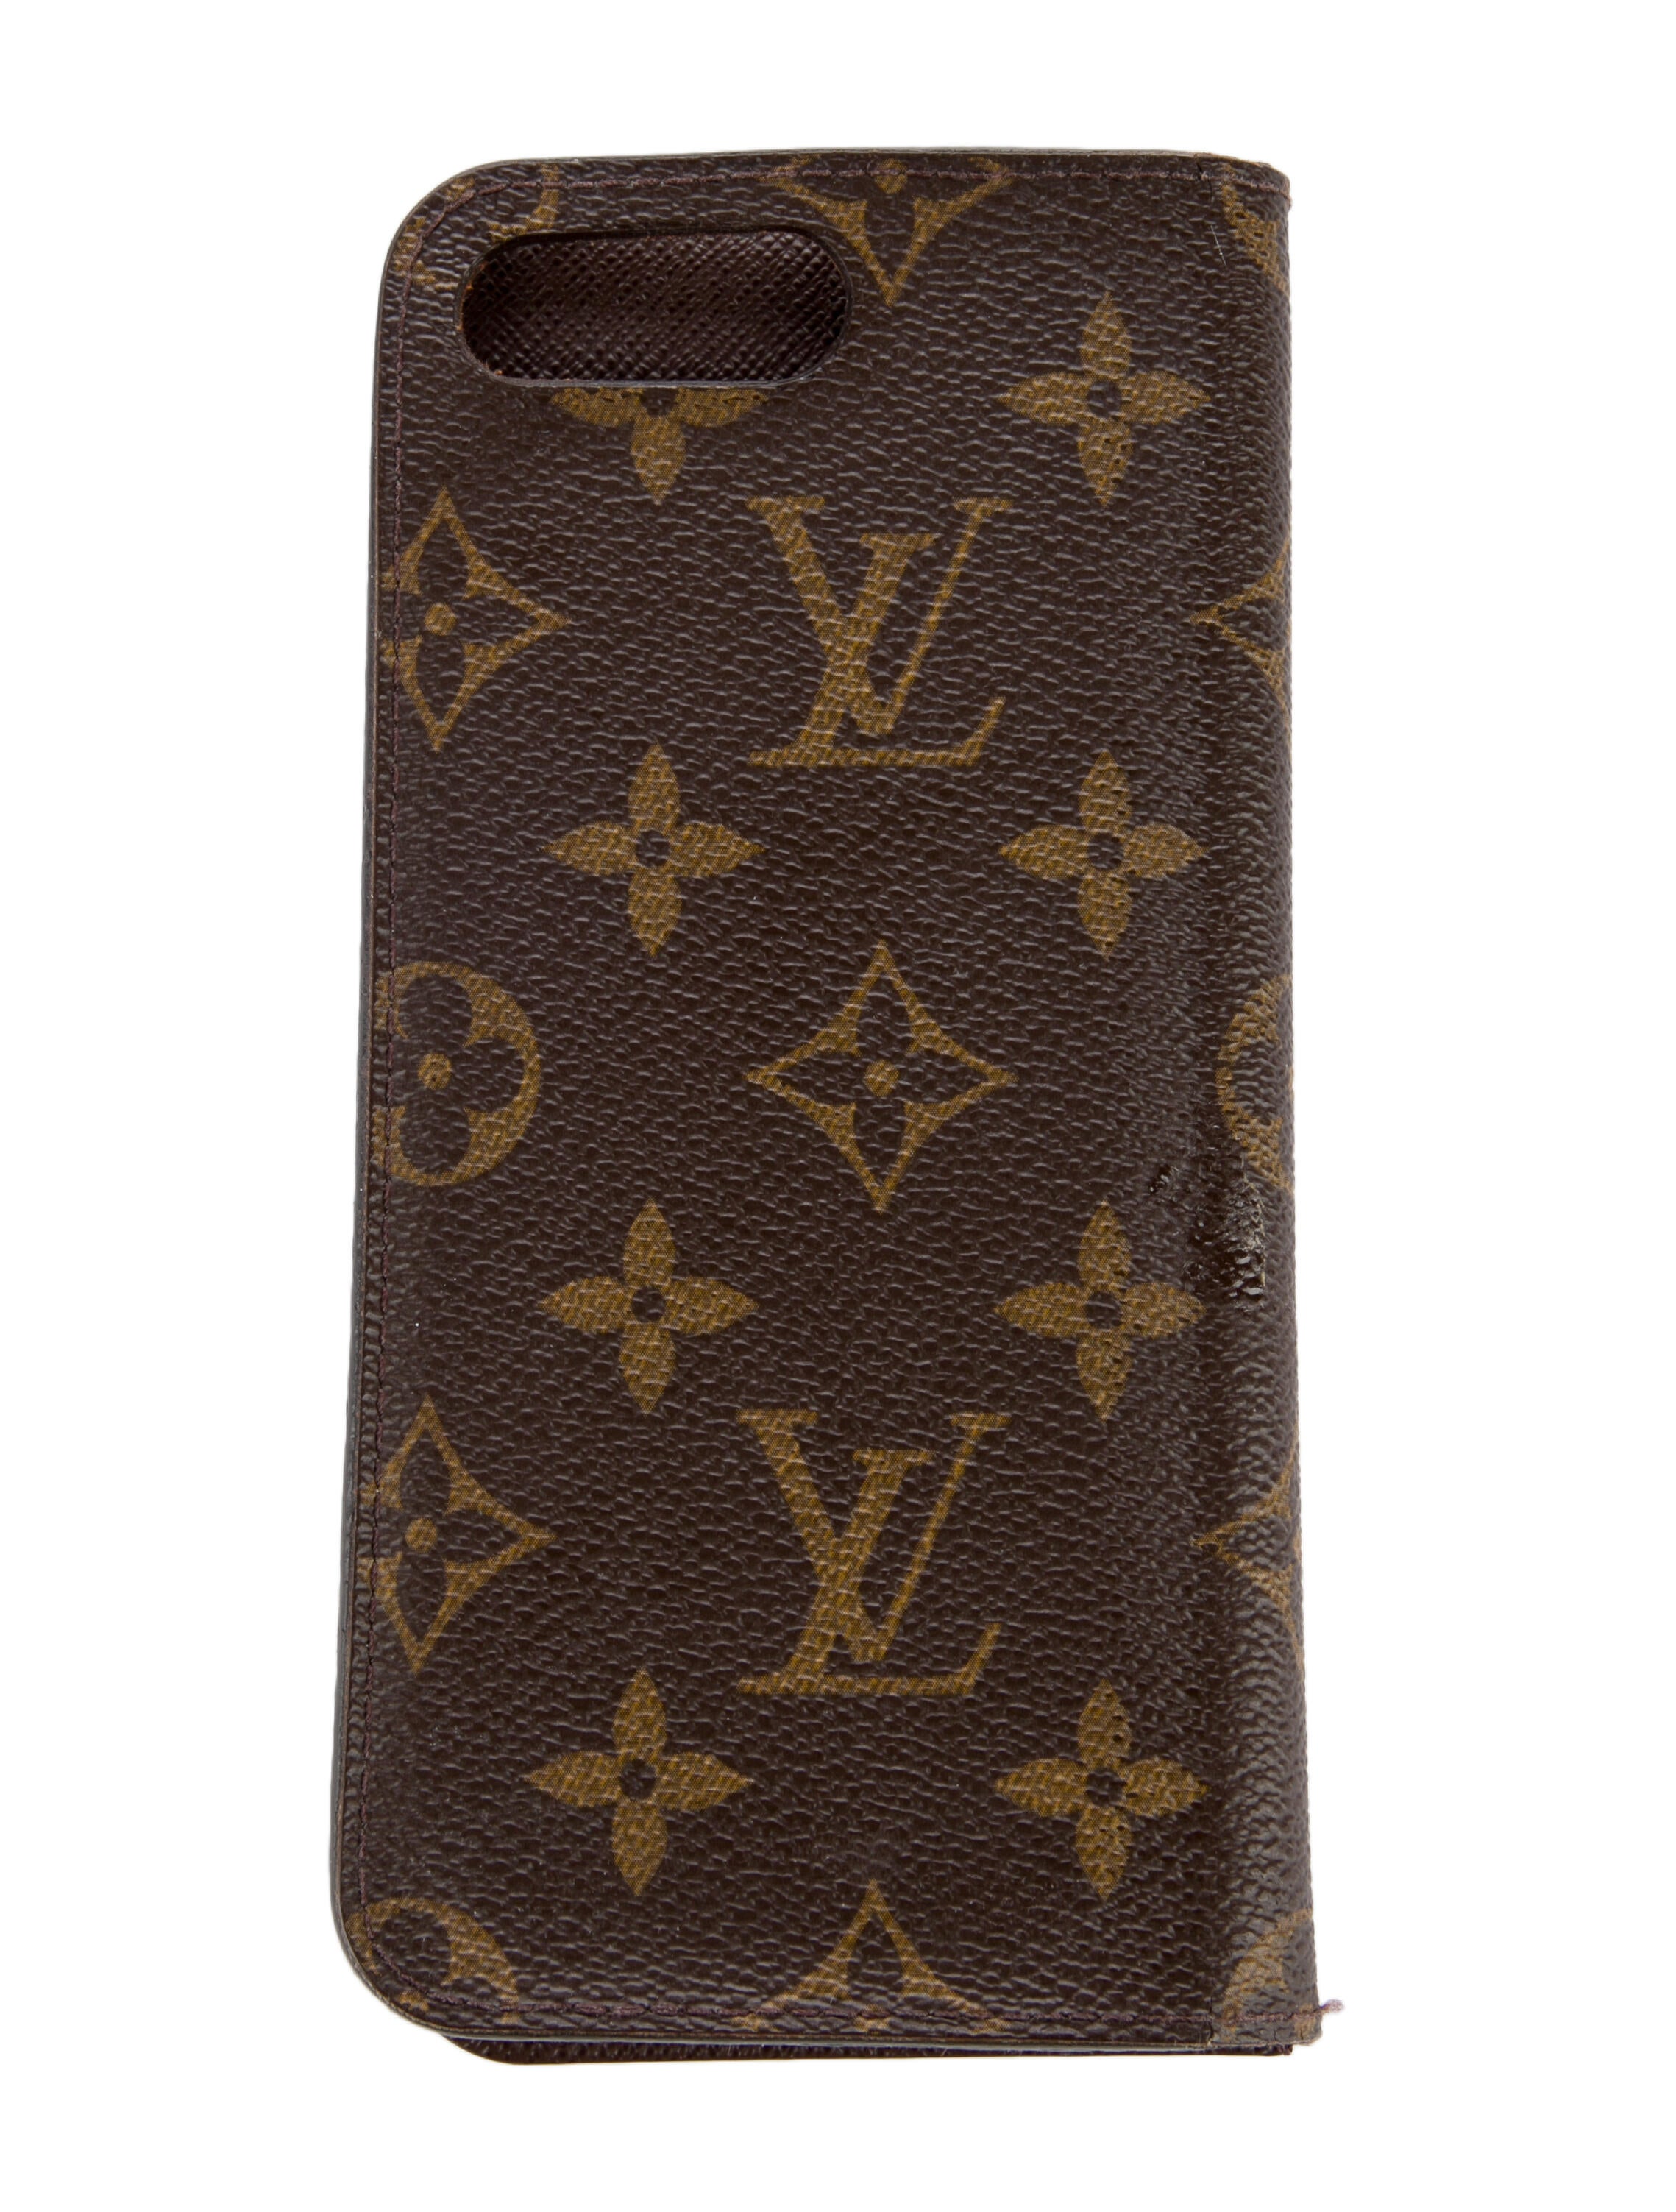 Brand Gifts on X: Louis Vuitton 🖤 3100 :SR